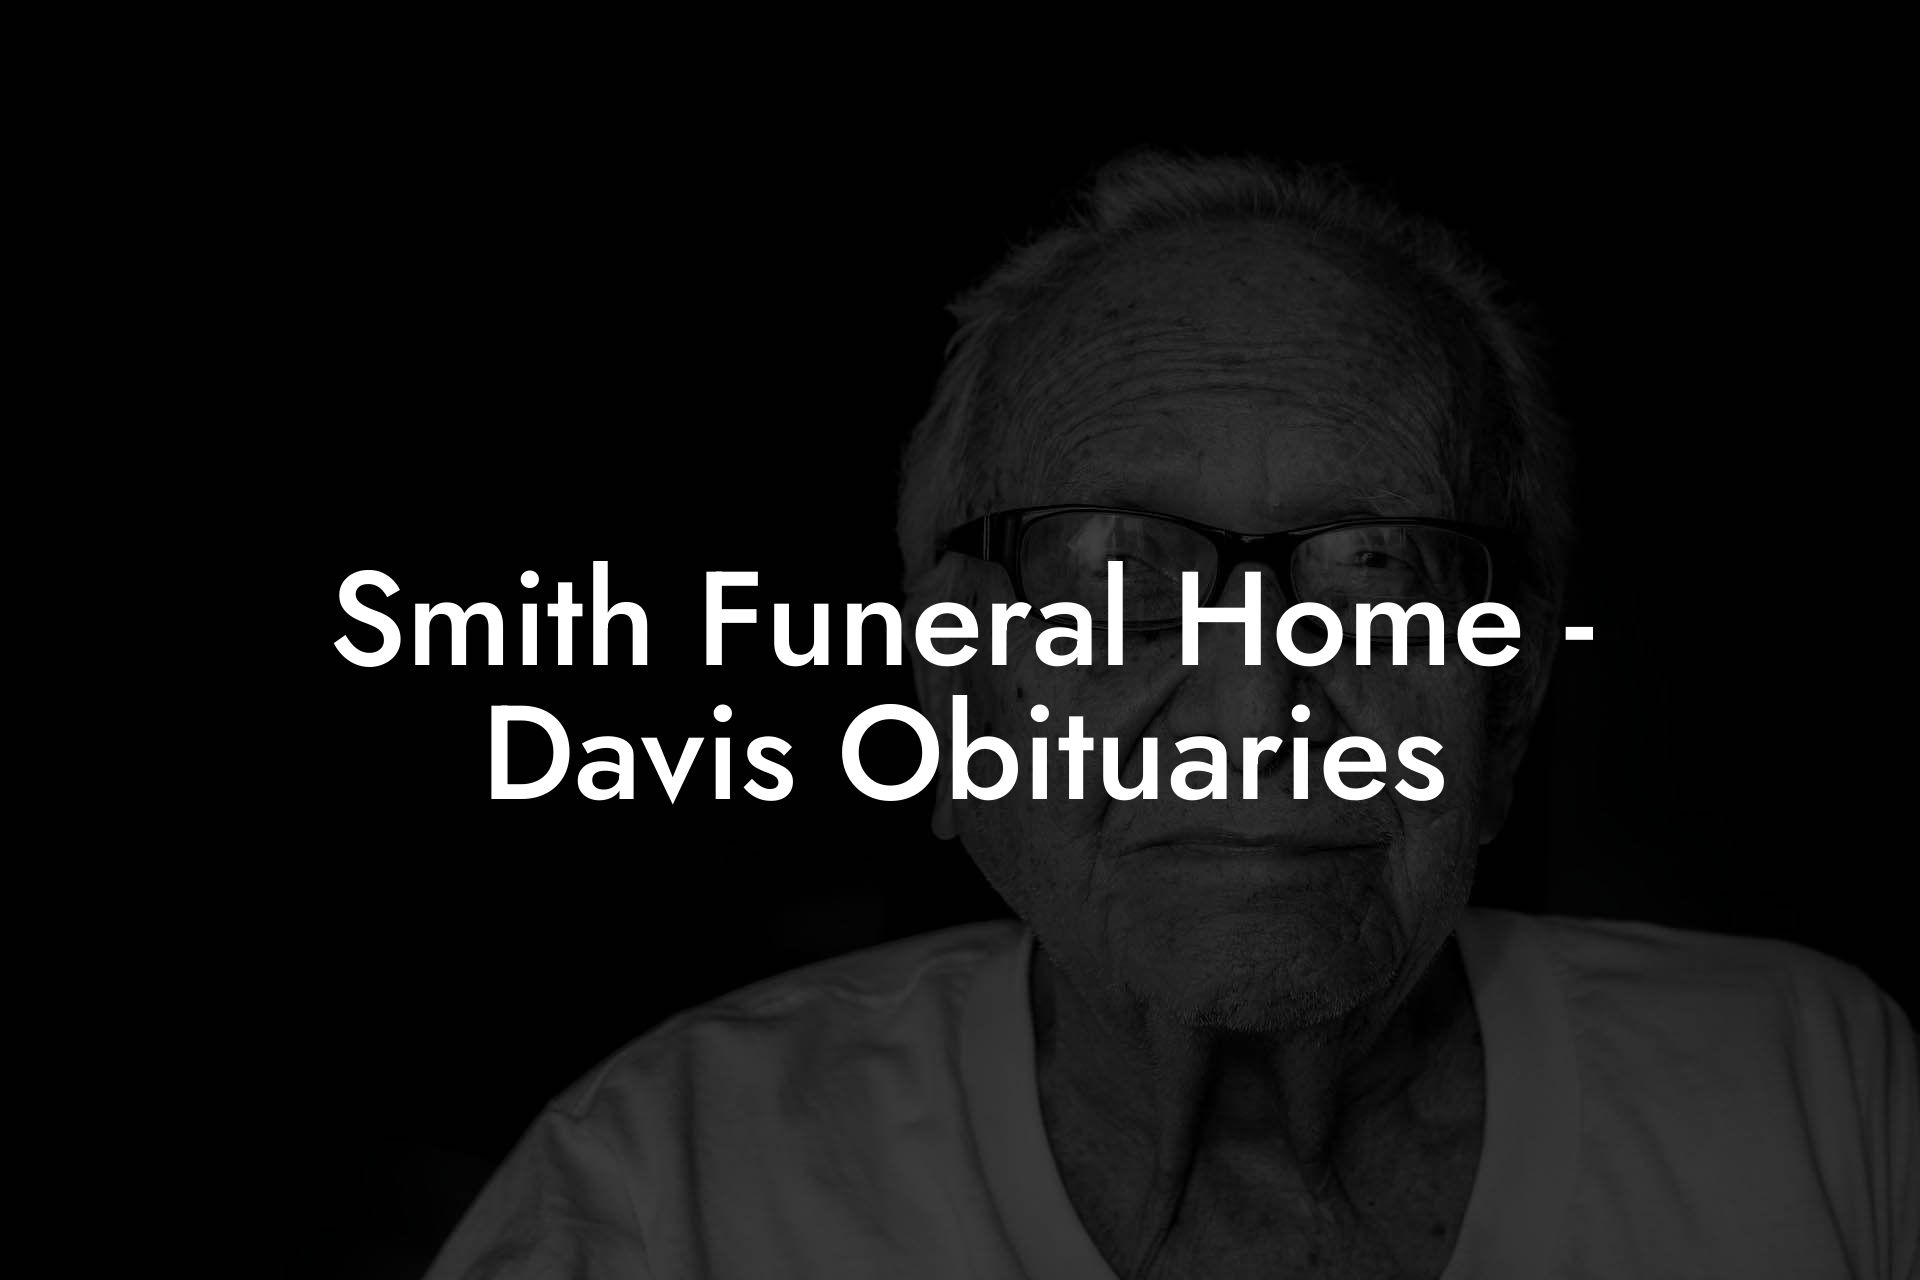 Smith Funeral Home - Davis Obituaries